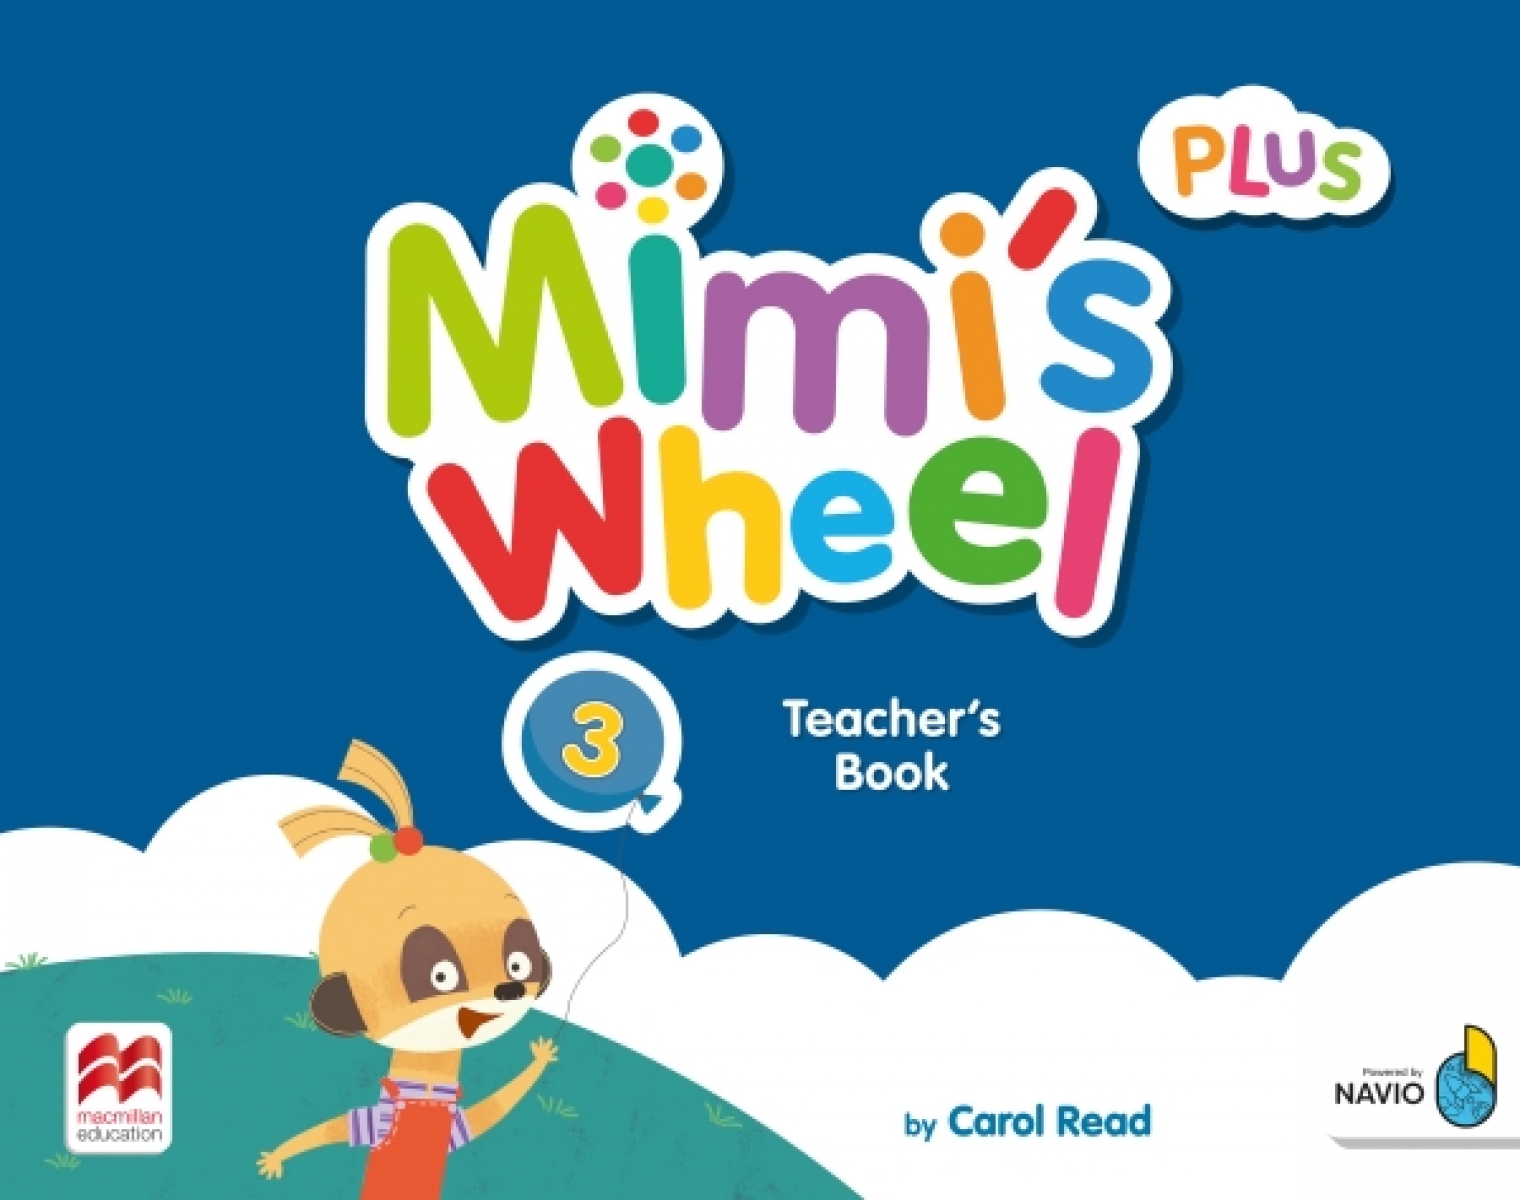 Read Carol Mimi's Wheel Level 3 Teacher's Book Plus with Navio App 